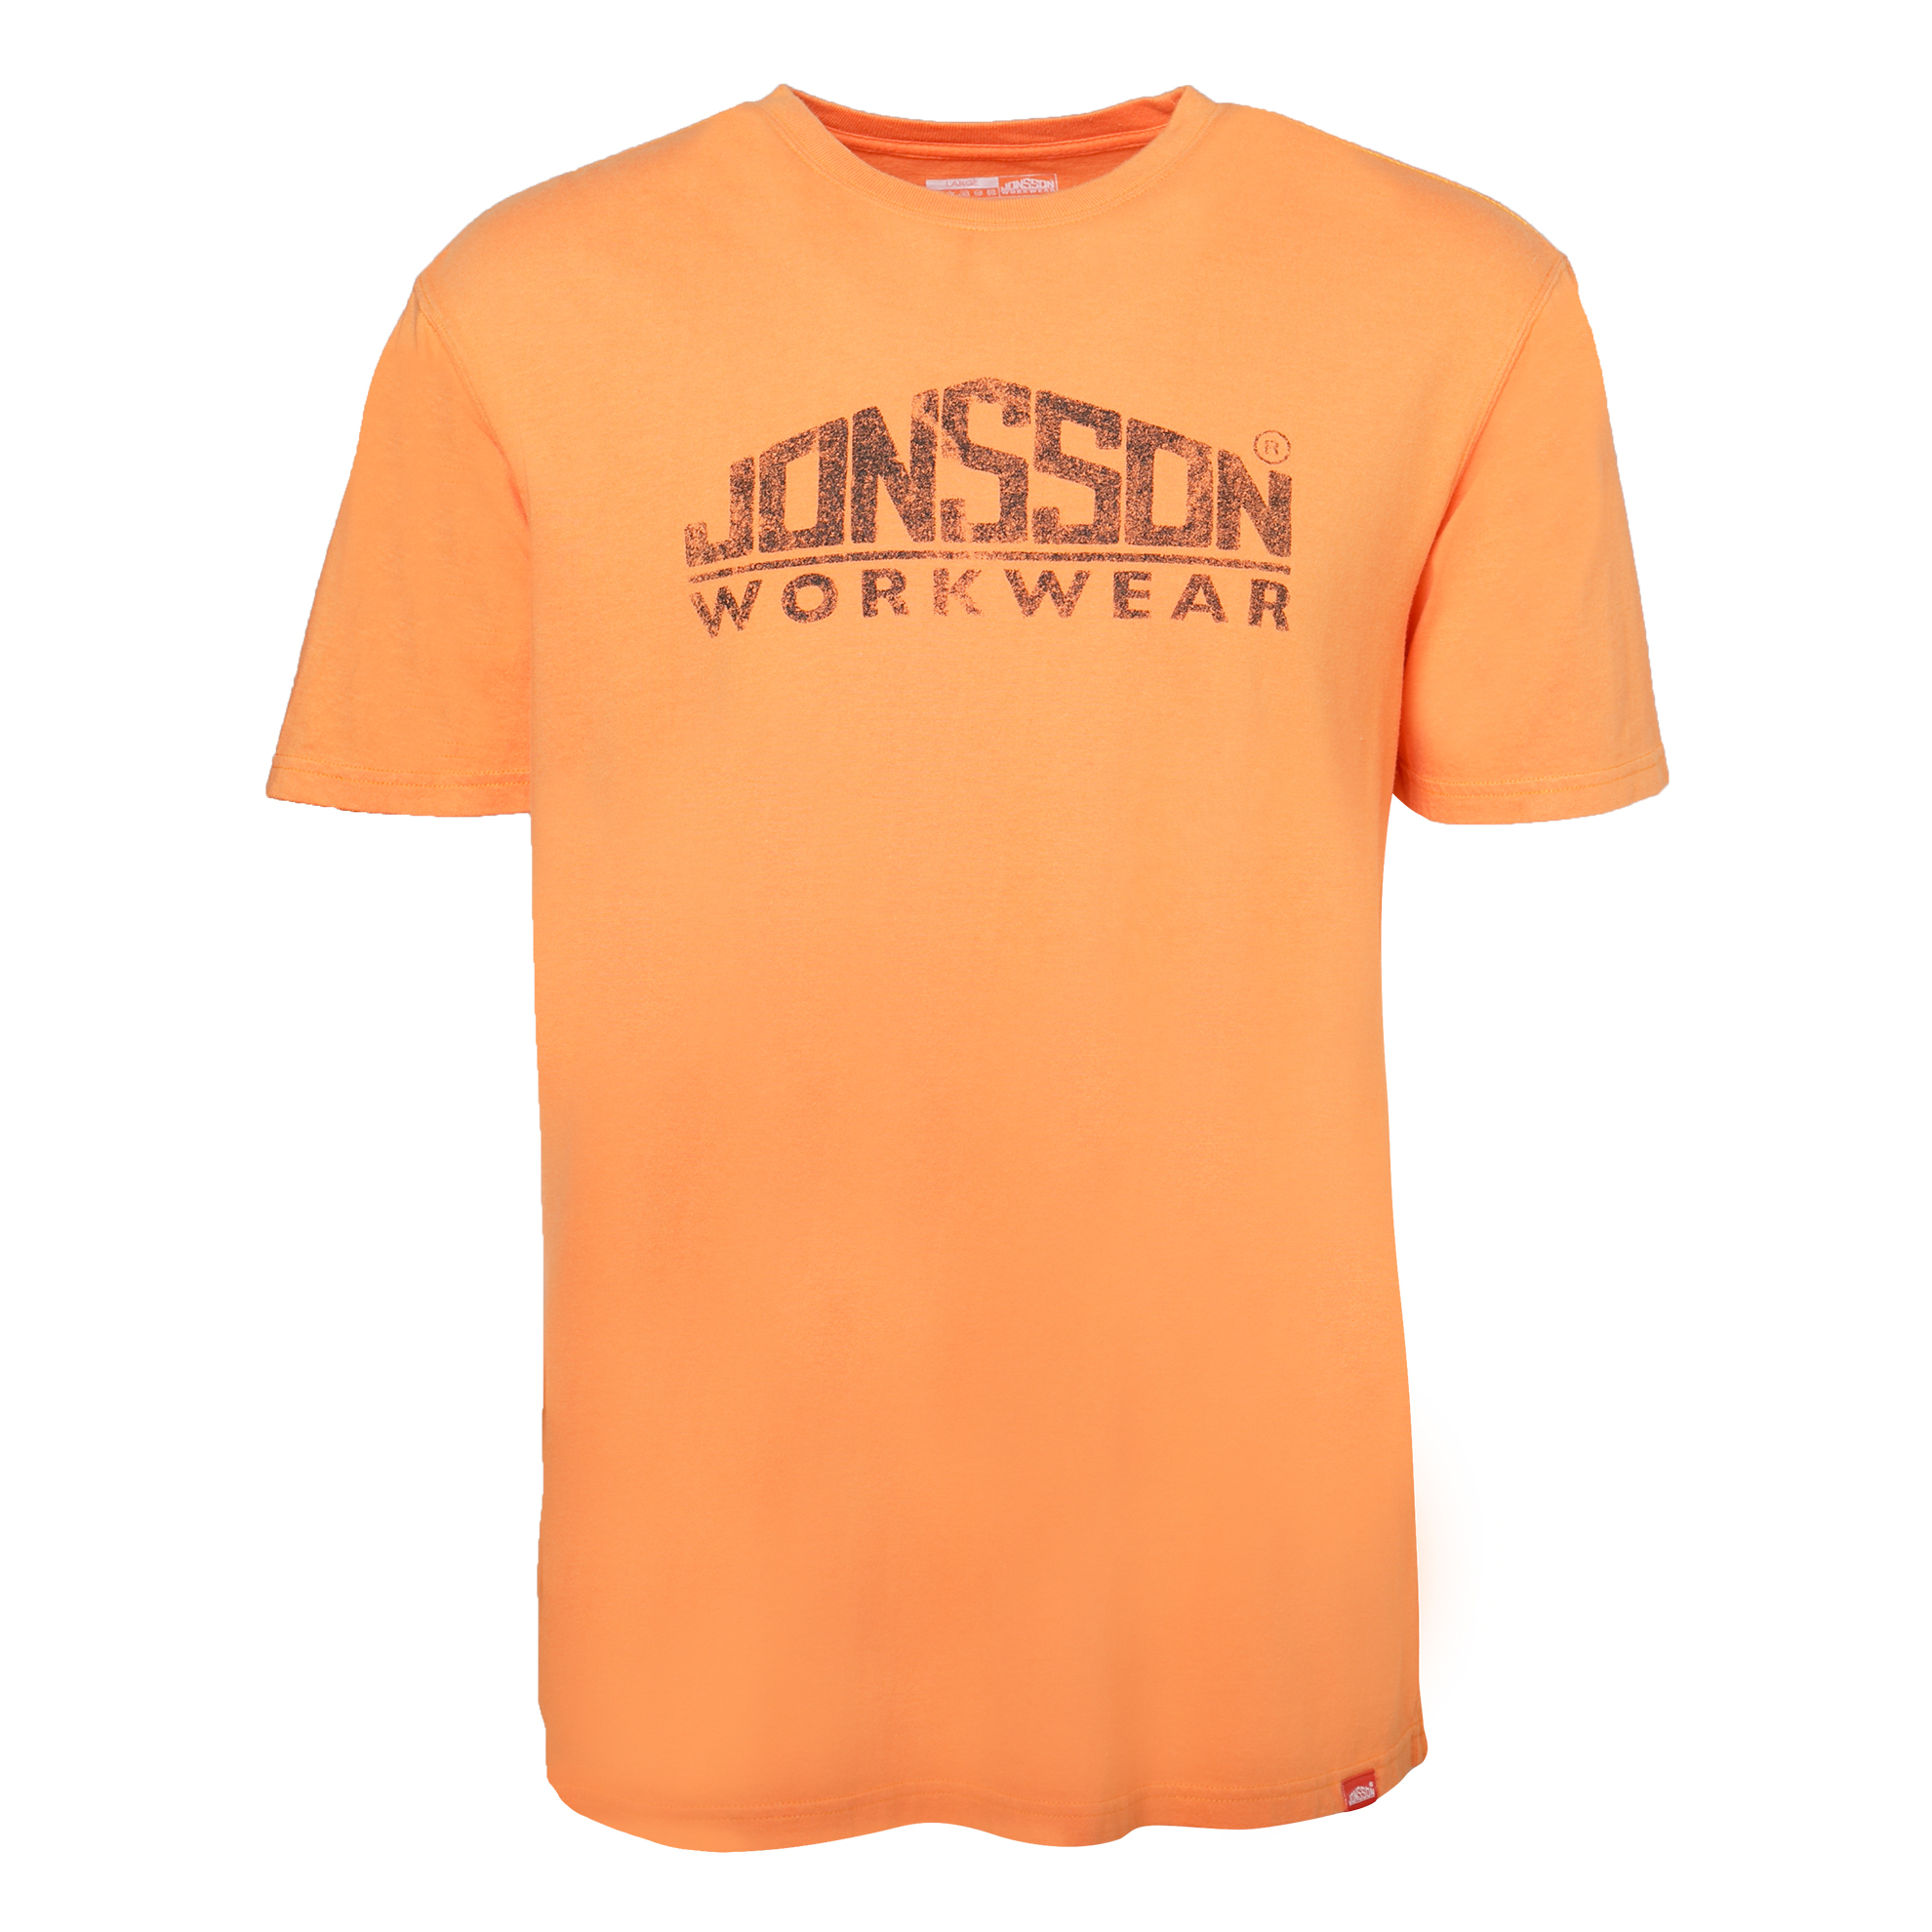 Jonsson Workwear | Jonsson Workwear Distressed Logo Tee